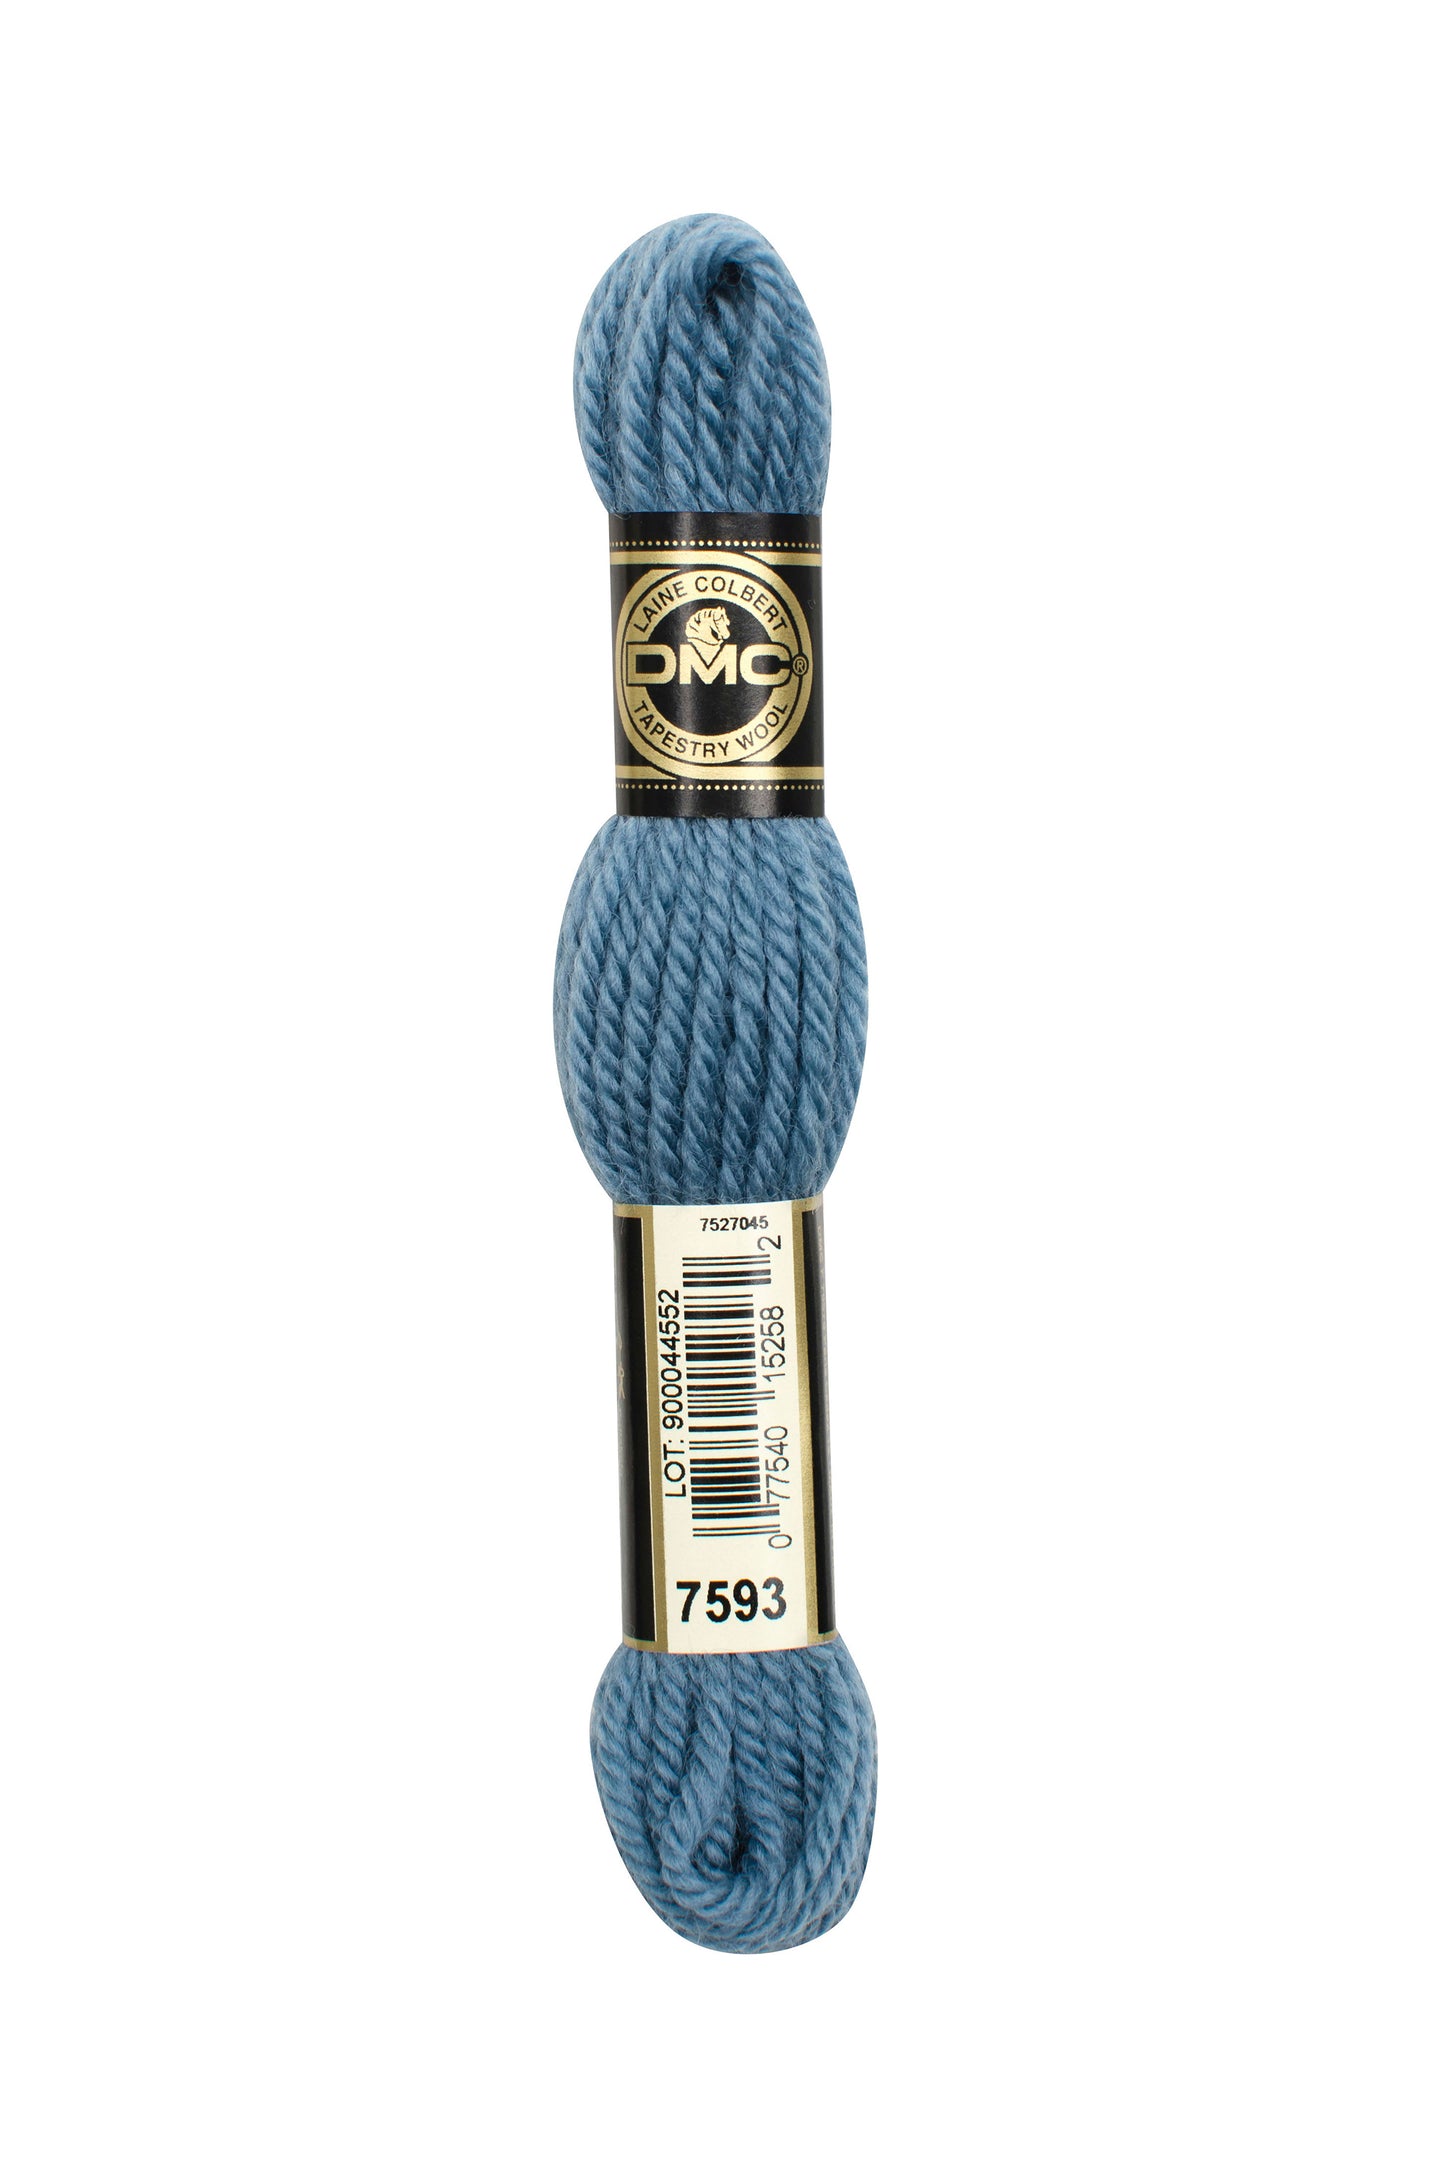 7593 – DMC Tapestry Wool